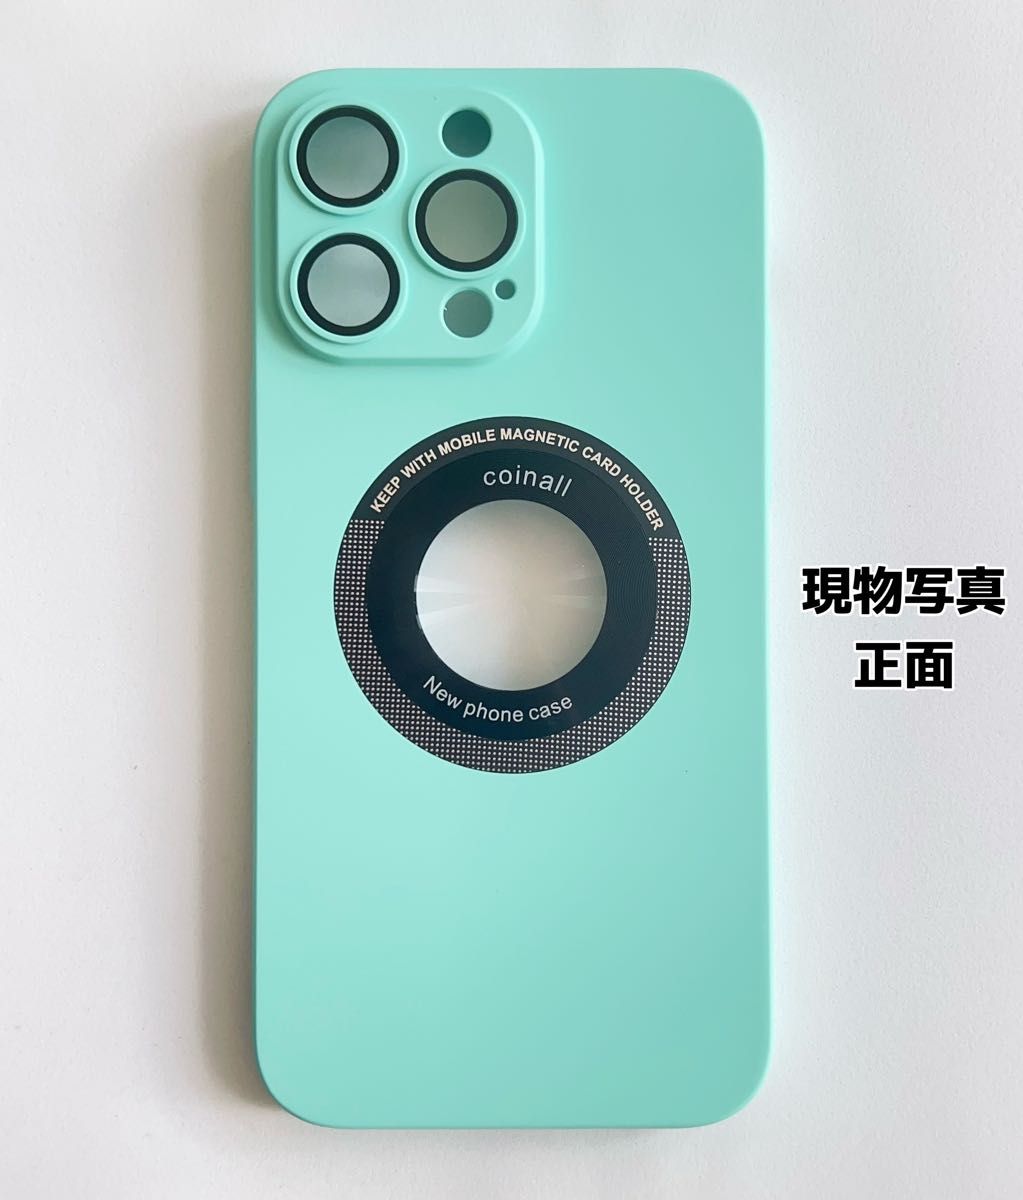 iPhone14promax ケース マグセーフ 新品 MagSafe対応 耐衝撃 滑り止め 指紋防止 カメラ保護フィルム付 